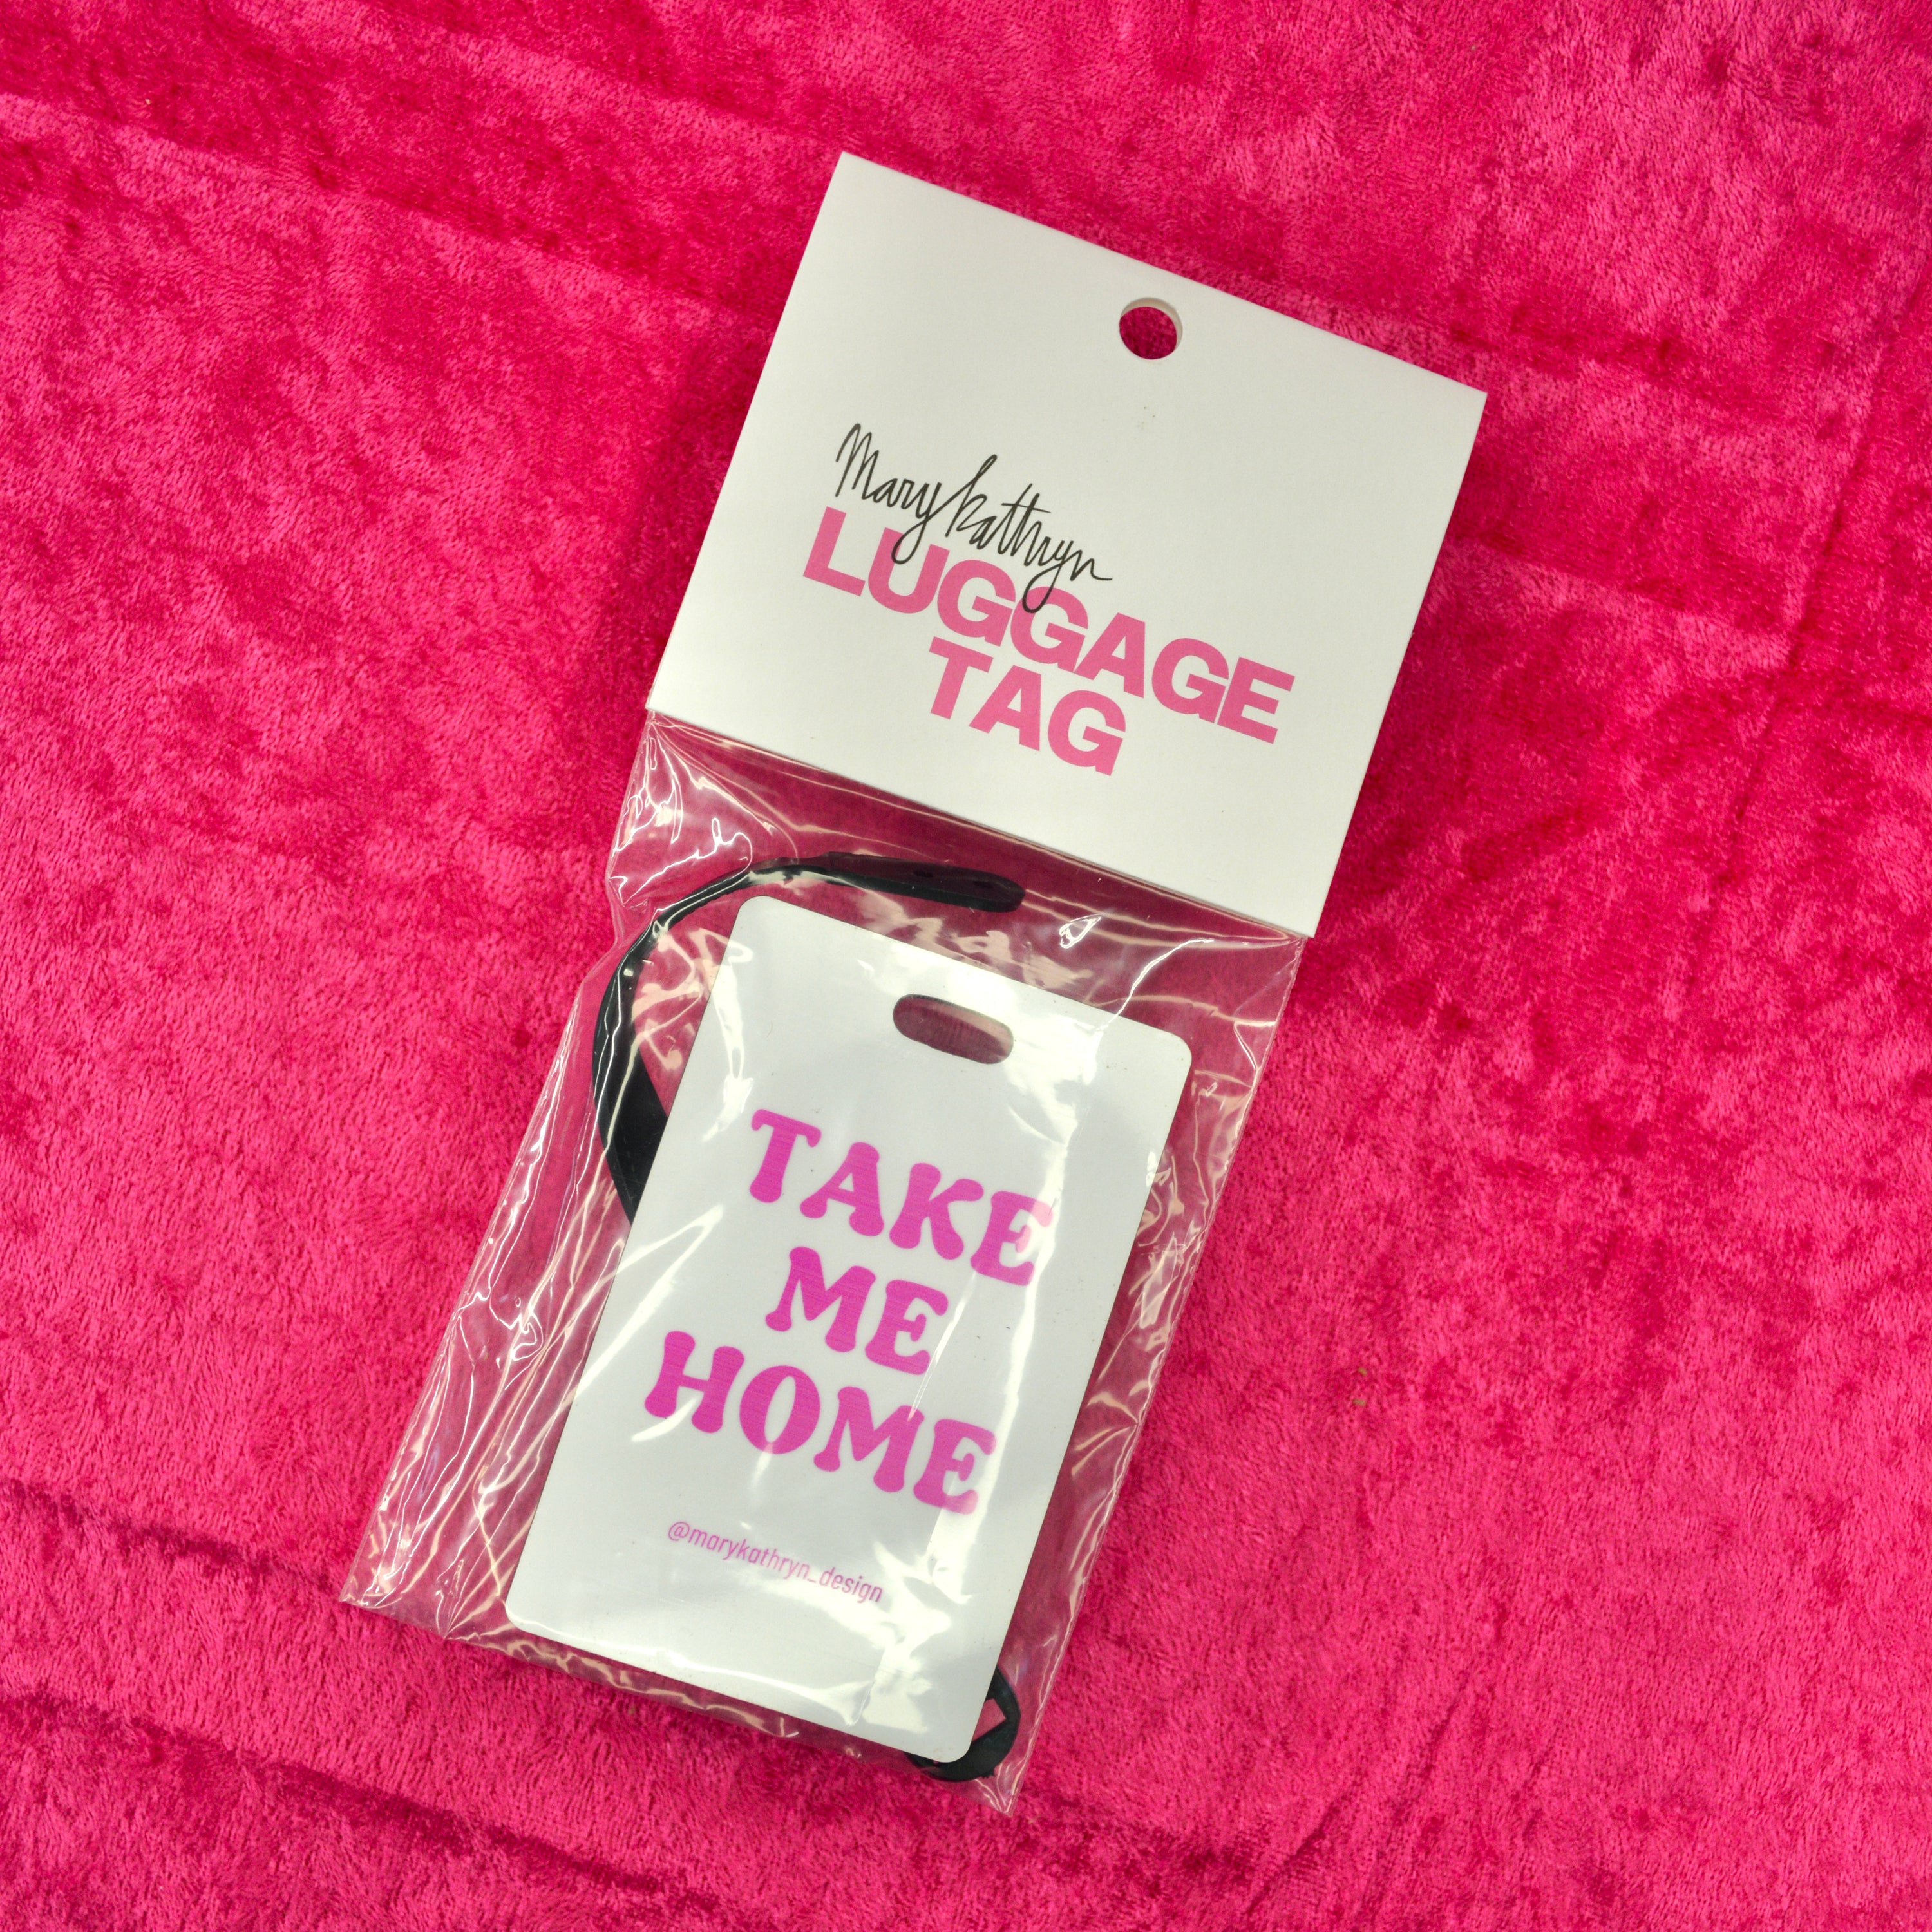 Take Me Home Luggage Tag